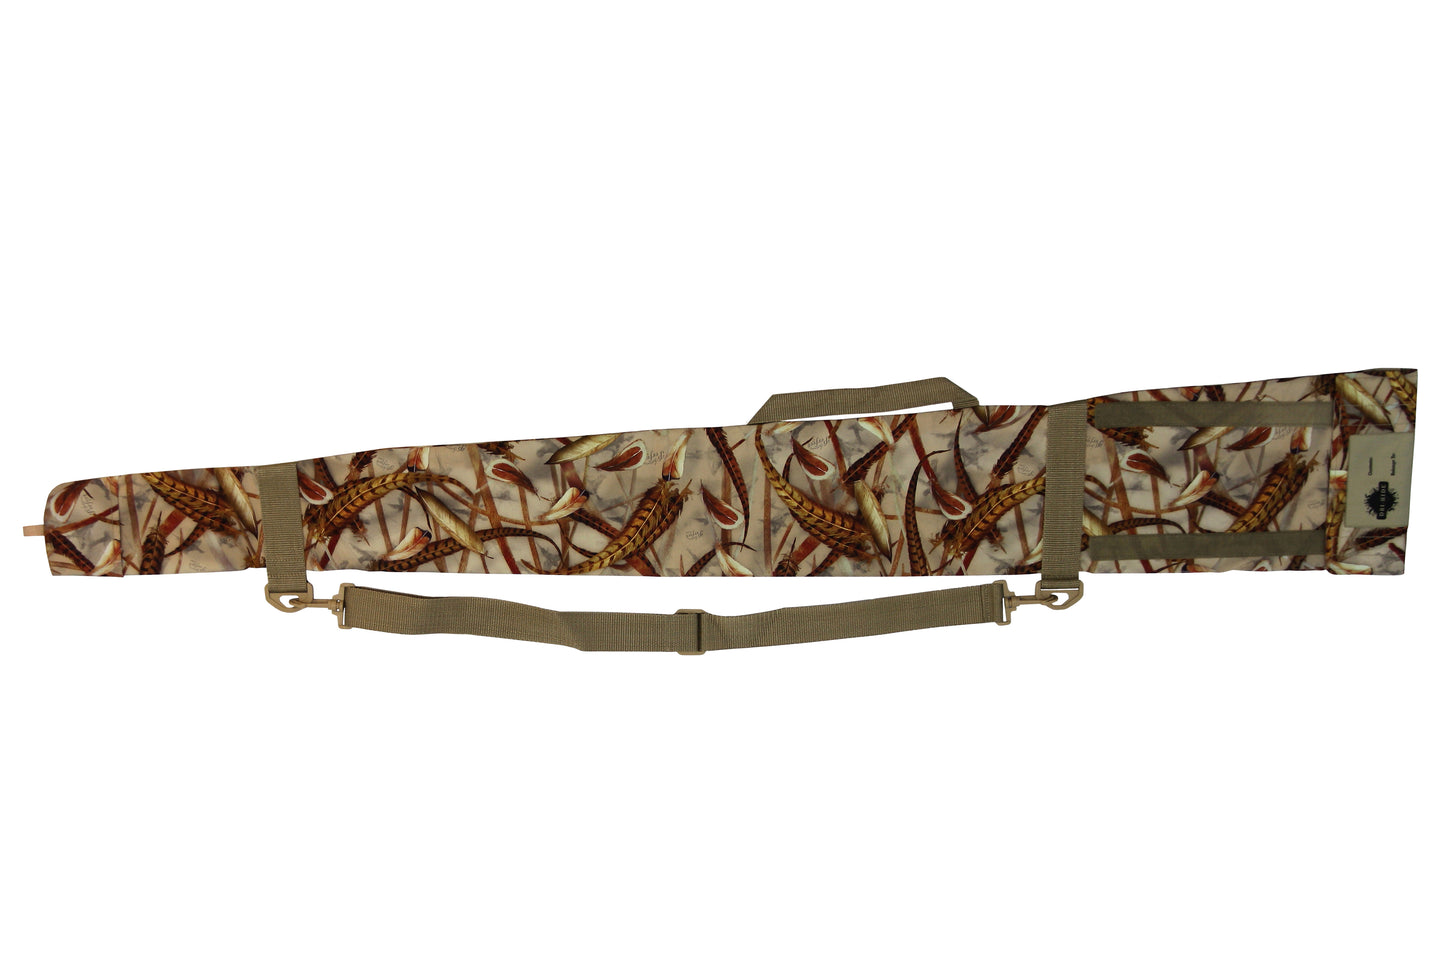 DU-HA 90500 Dri-Hide Shotgun Protector With Adjustable Sling - Flushing Pheasants - Tan Camo